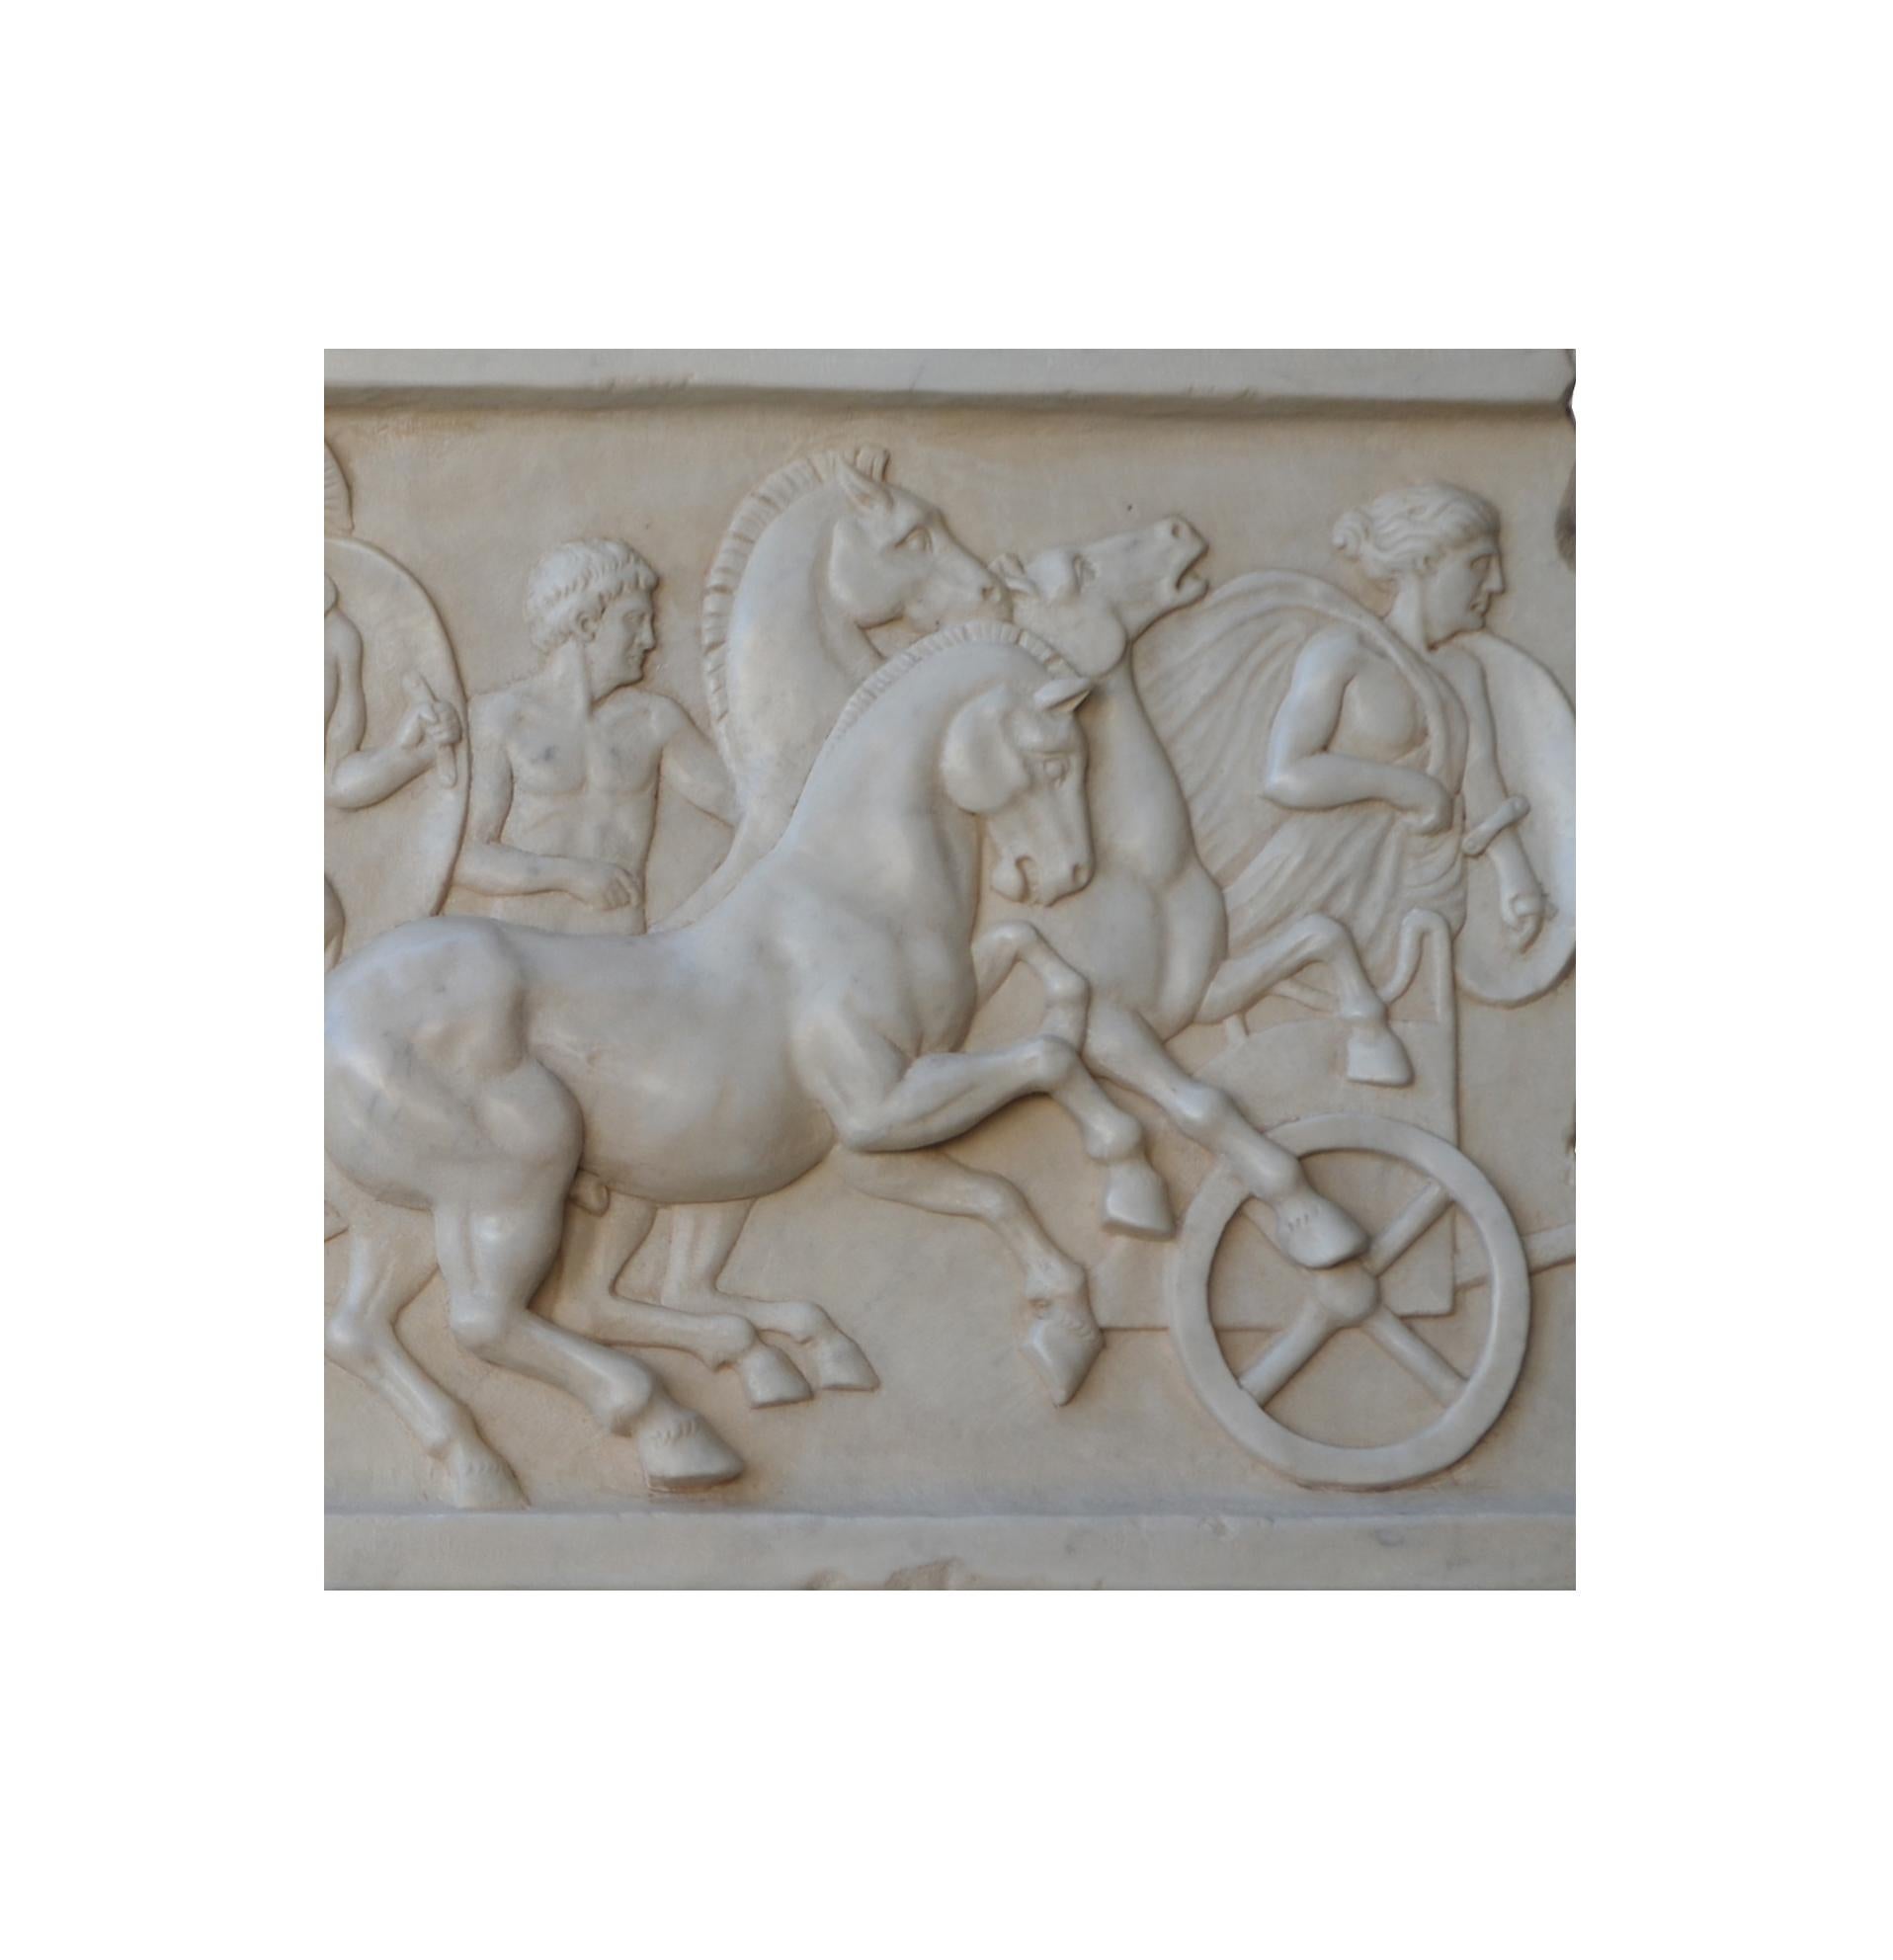 Altorilievo mit Szene di cavalli und Bighe römischer Romantik in Marmo Bianco Carrara (Italian) im Angebot